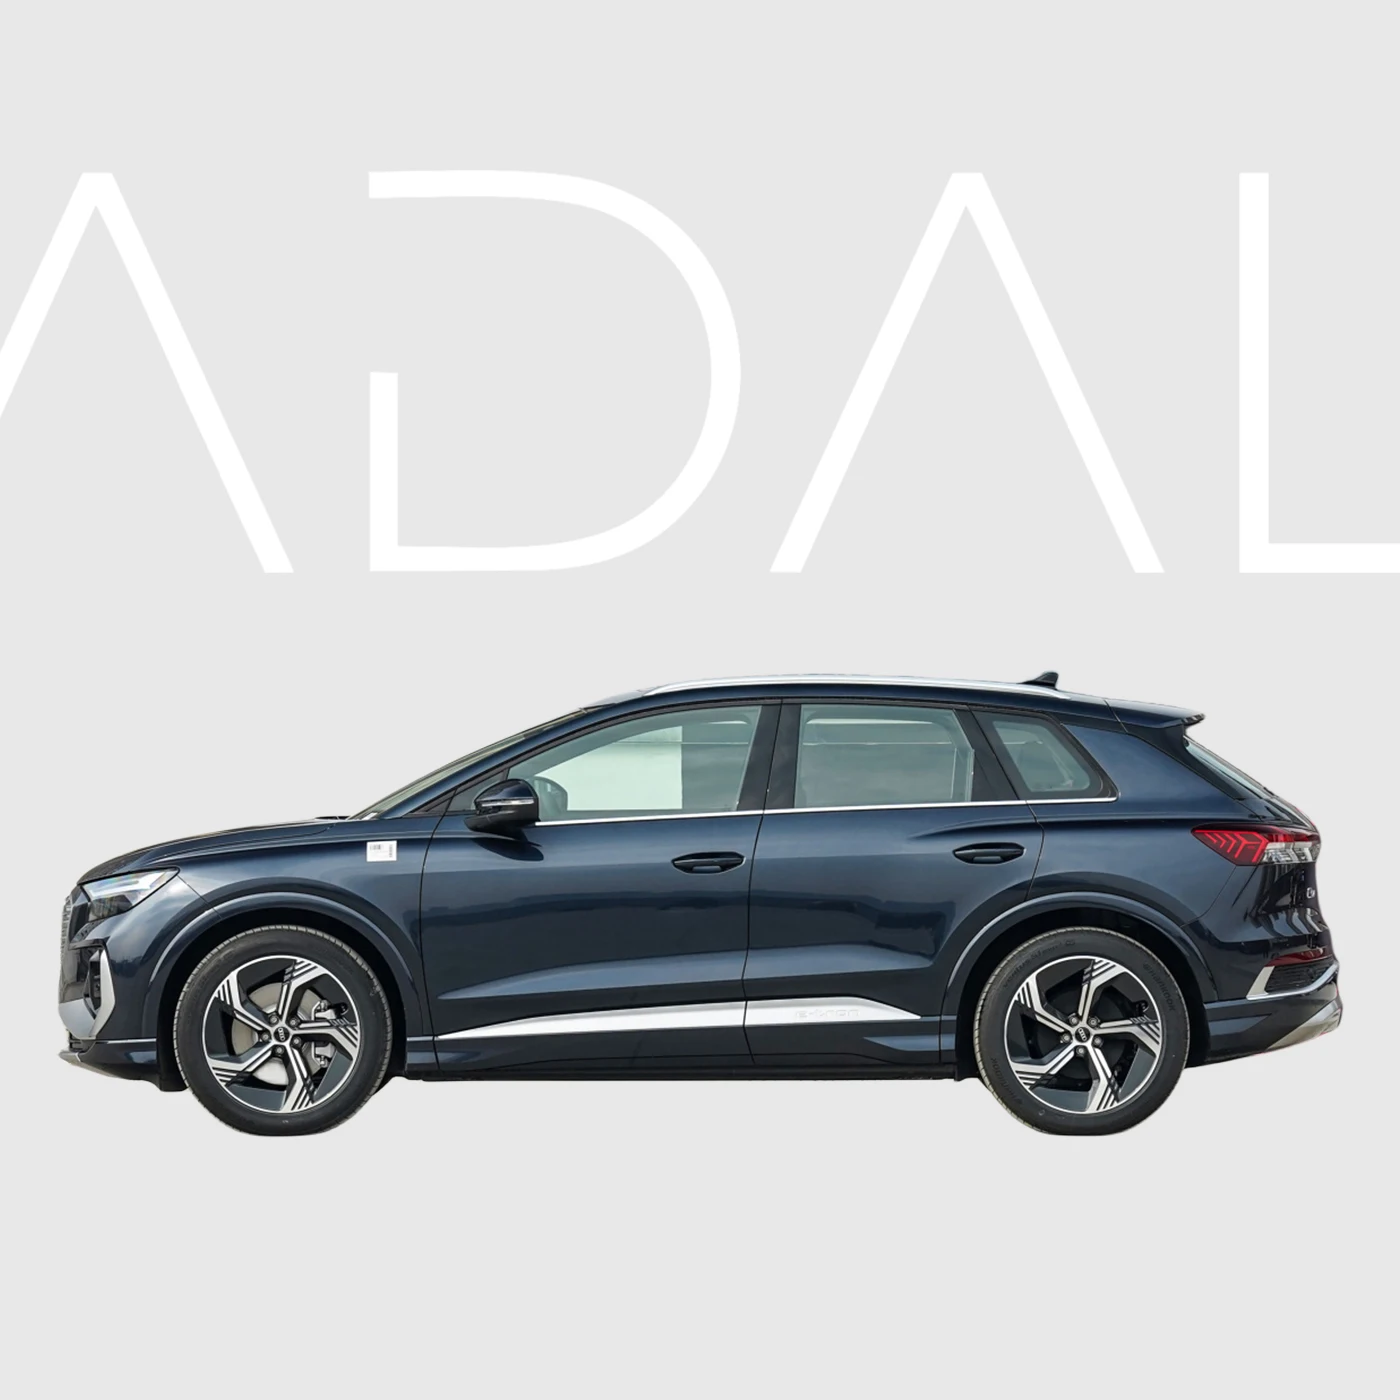 Audi Q4 e-Pure Electric Luxury SUV New Energy Vehicle